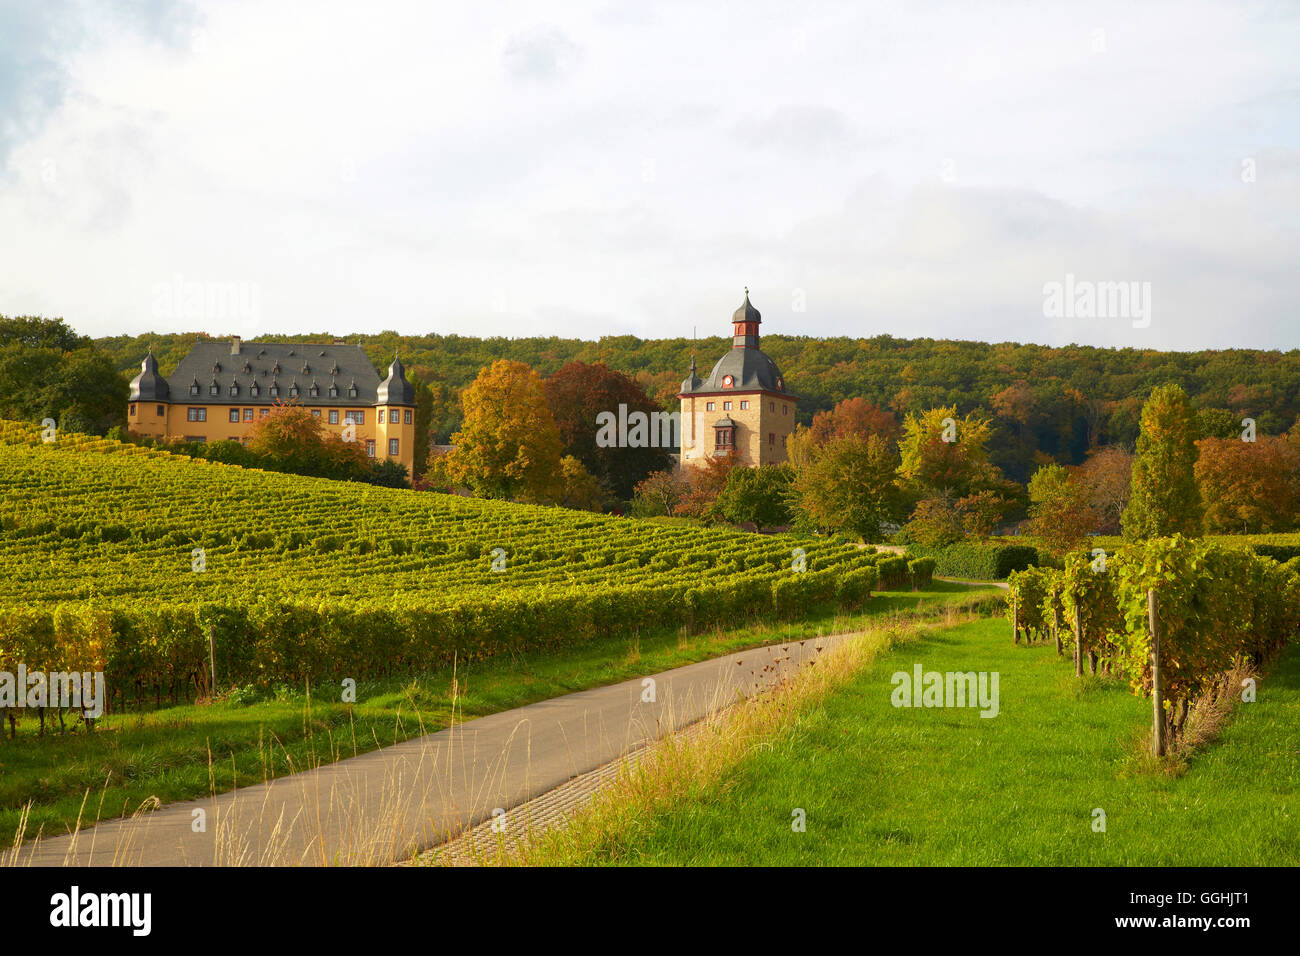 Schloss Vollrads Winery, près de Oestrich-Winkel, Mittelrhein, Rhin moyen, Hesse, Germany, Europe Banque D'Images